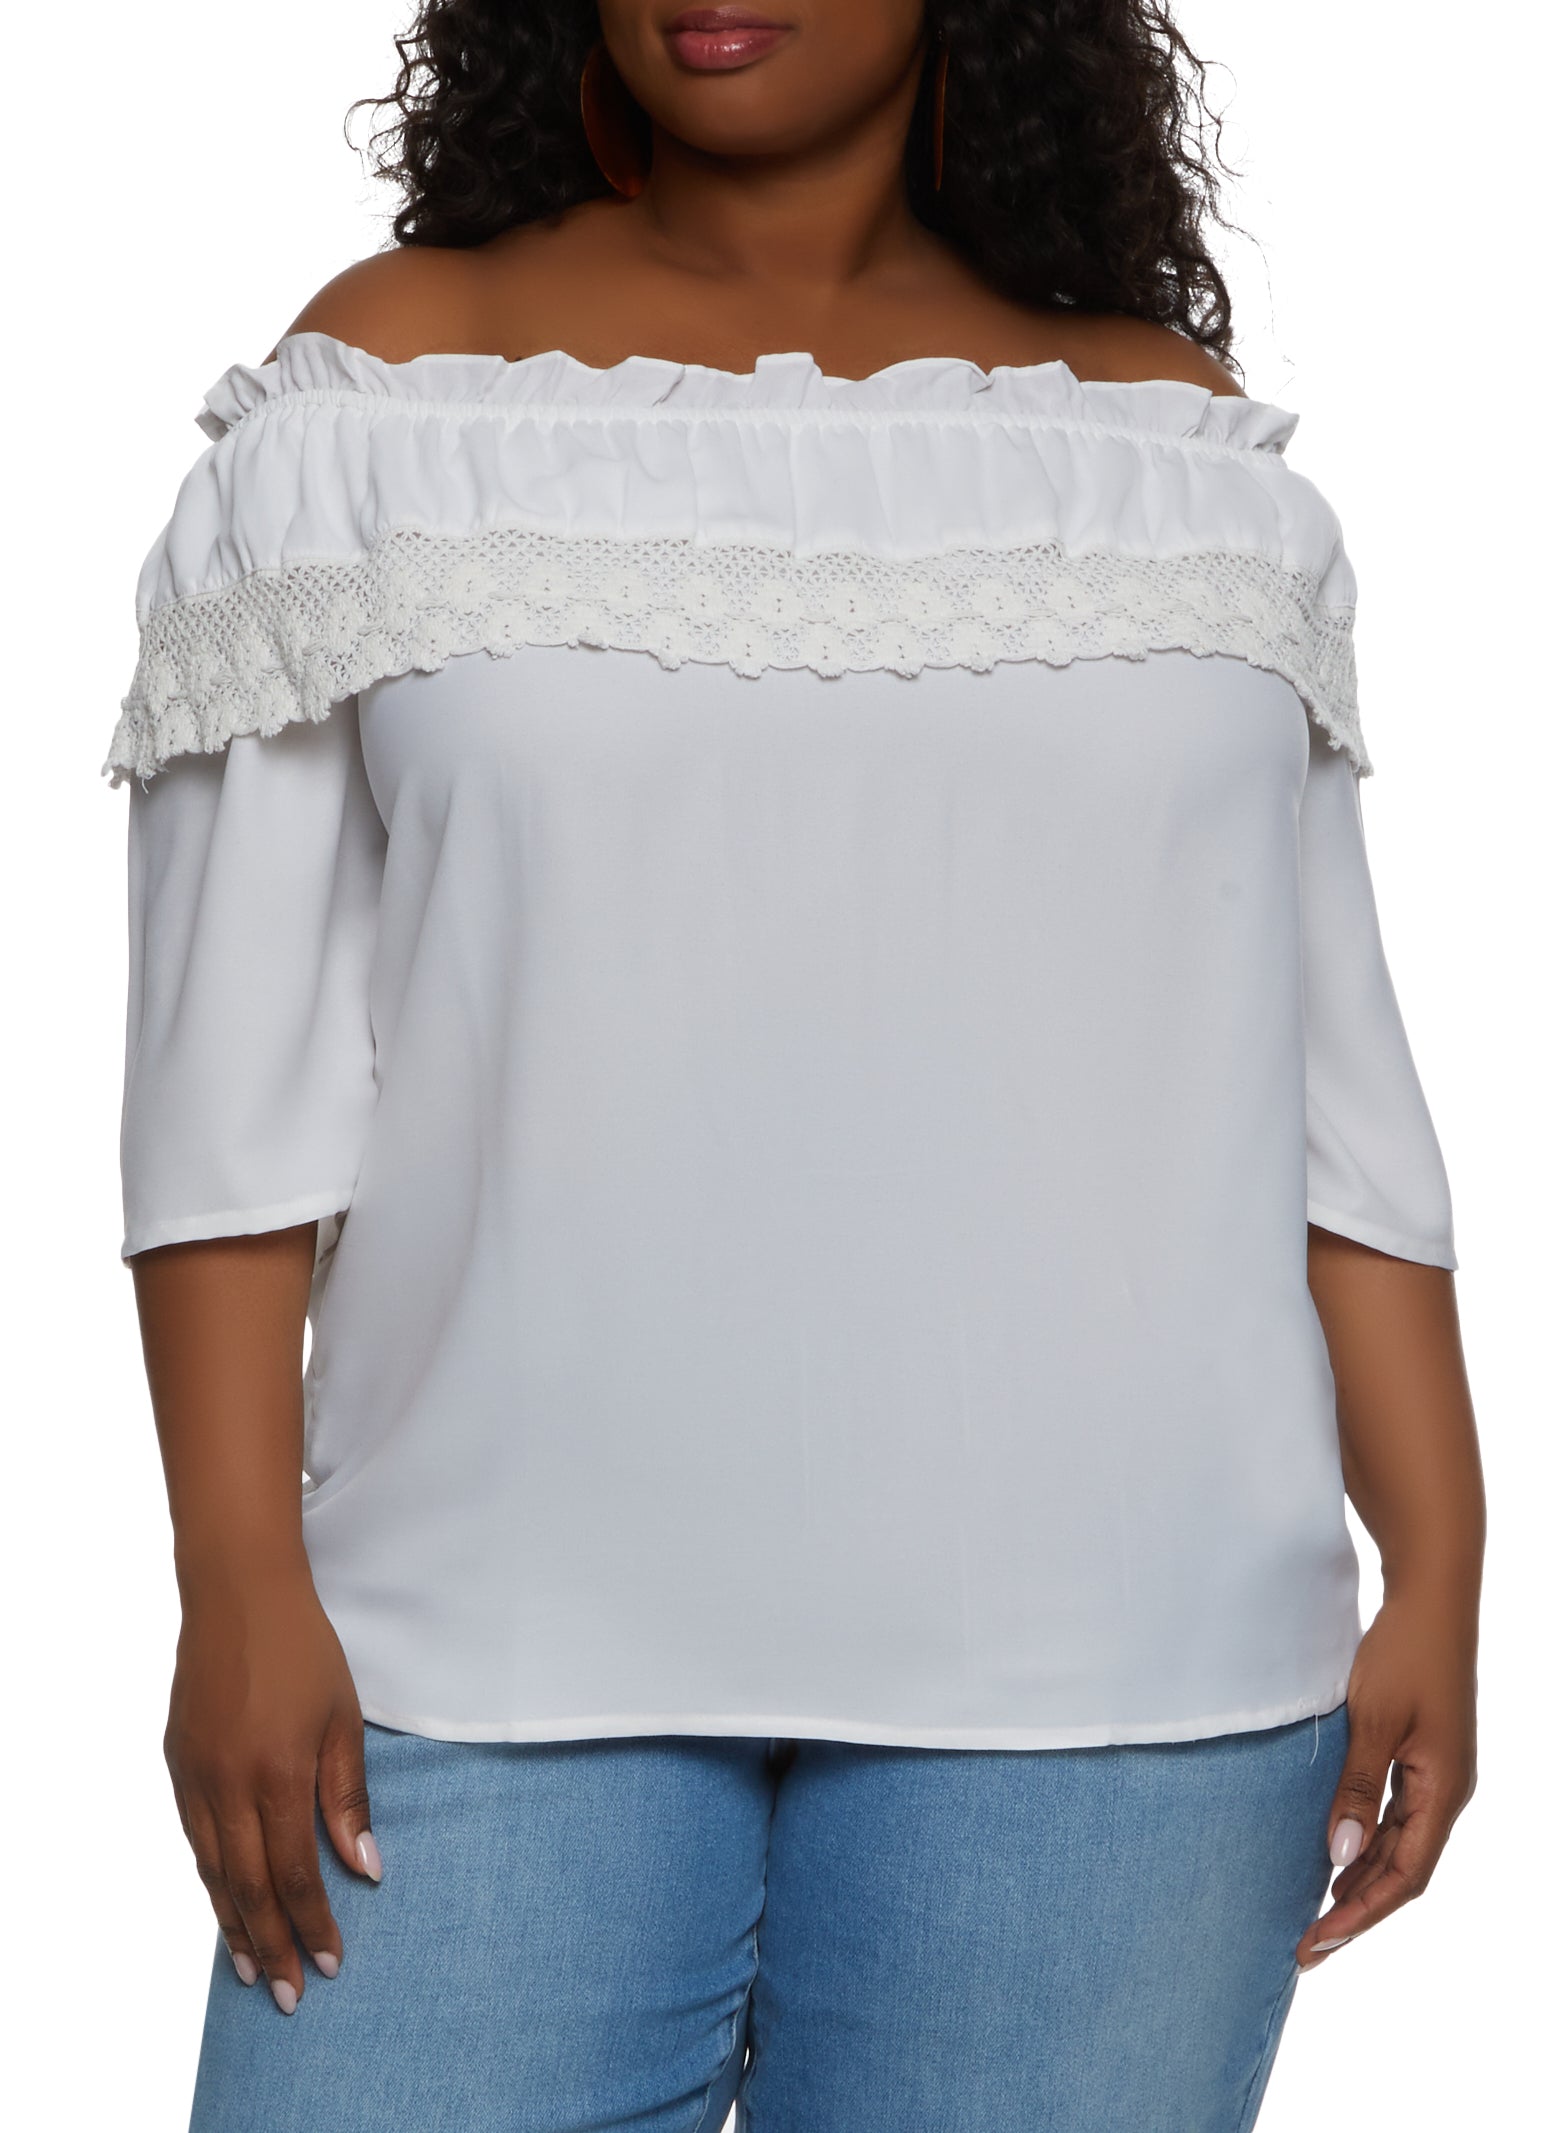 Womens Plus Size Crochet Detail Off the Shoulder Top, White, Size 3X